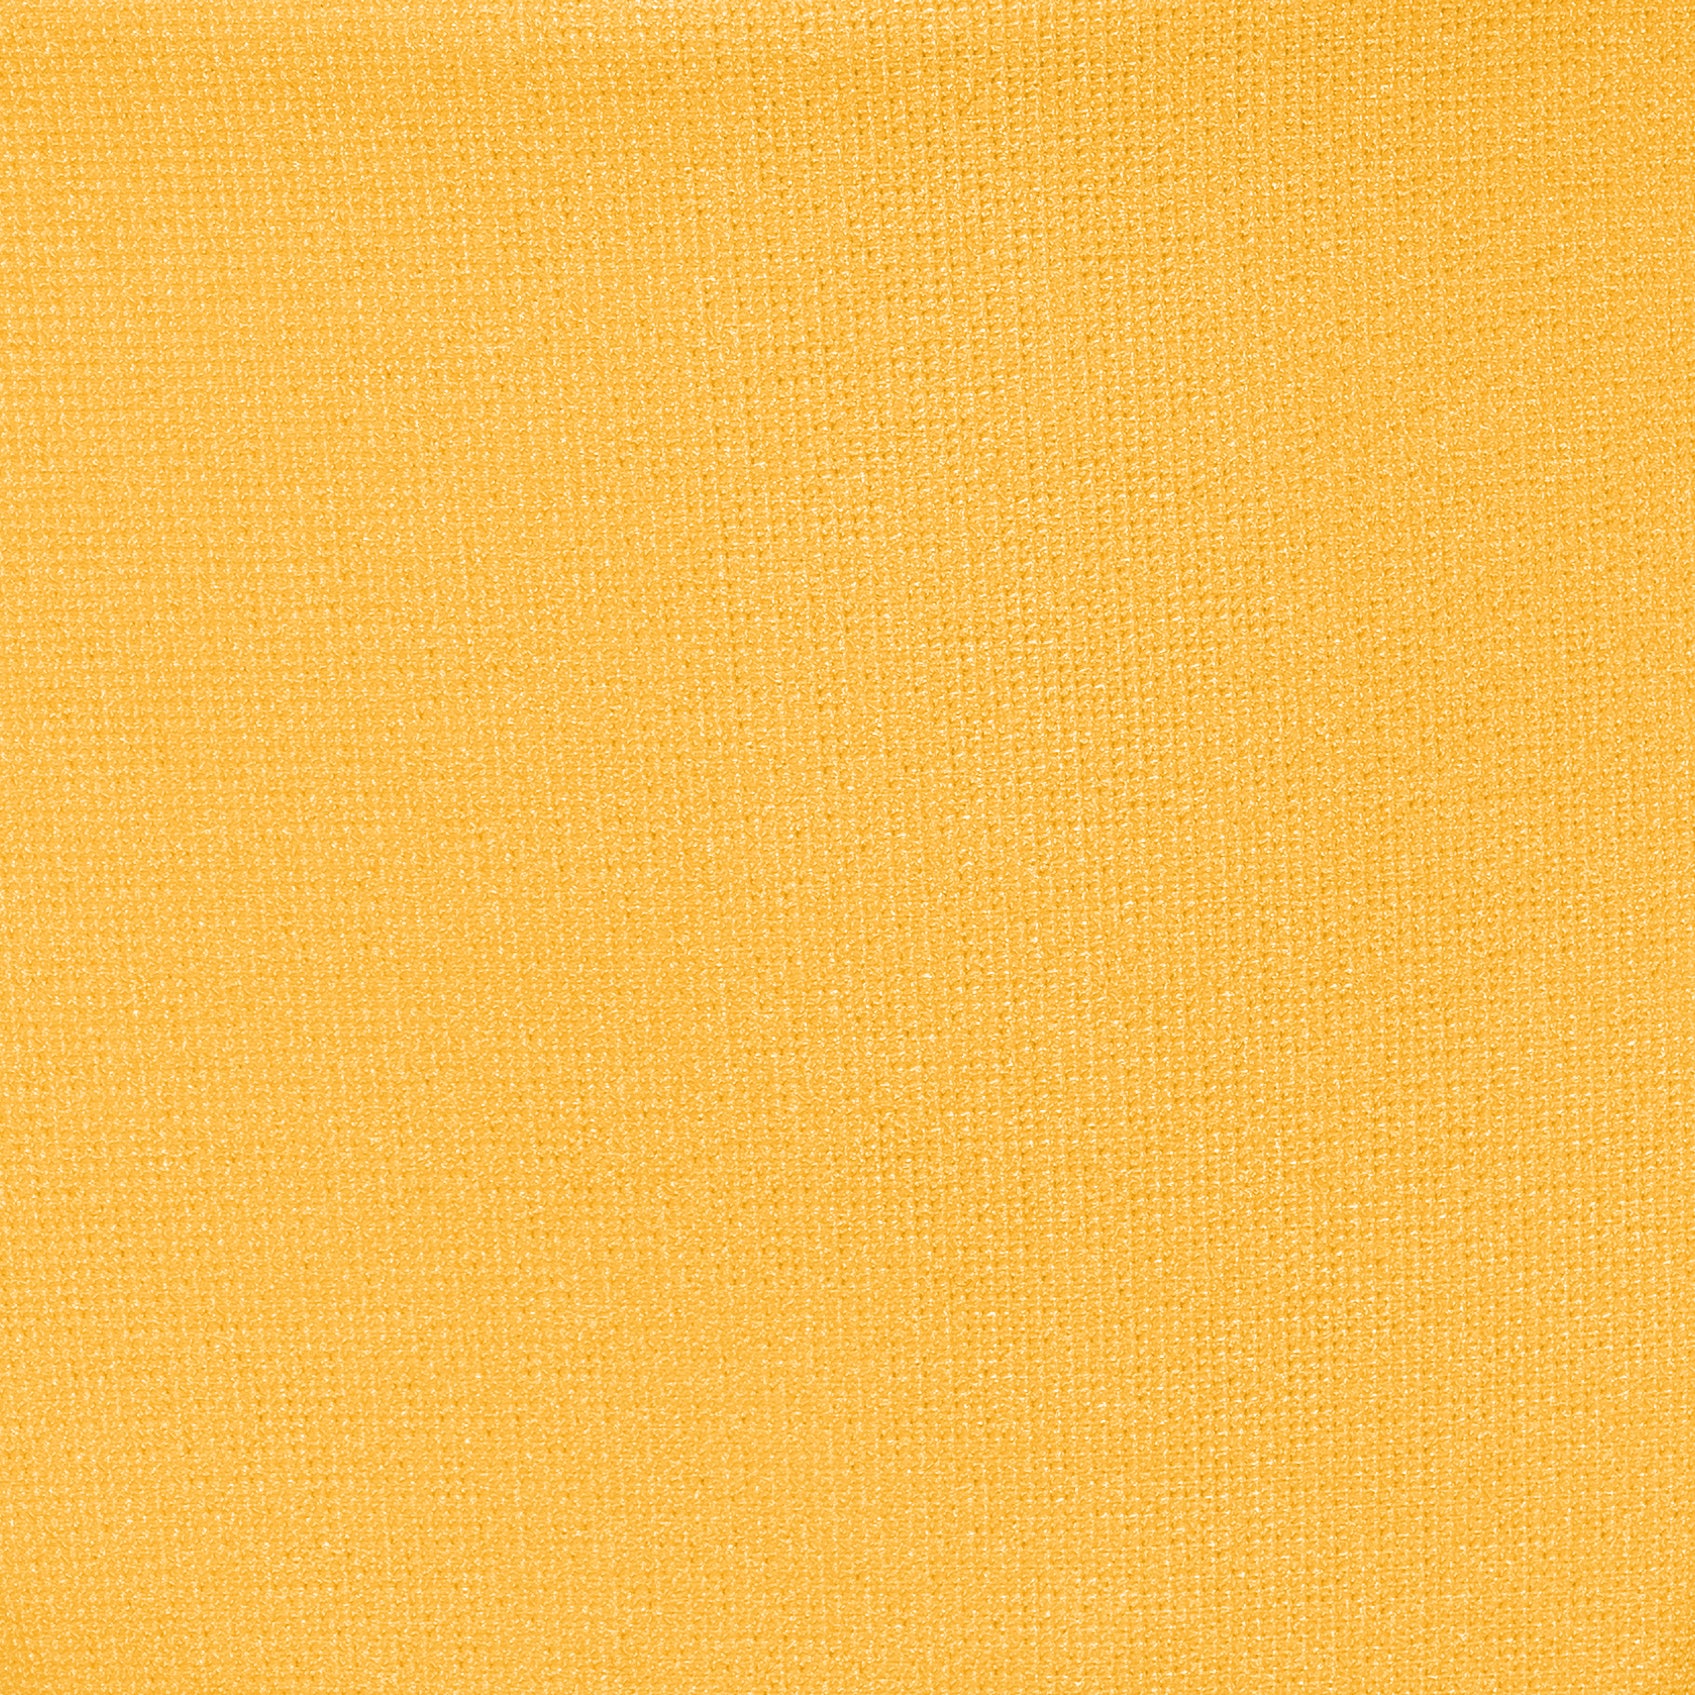 Bottom Malibu-Yellow Cheeky-Tie